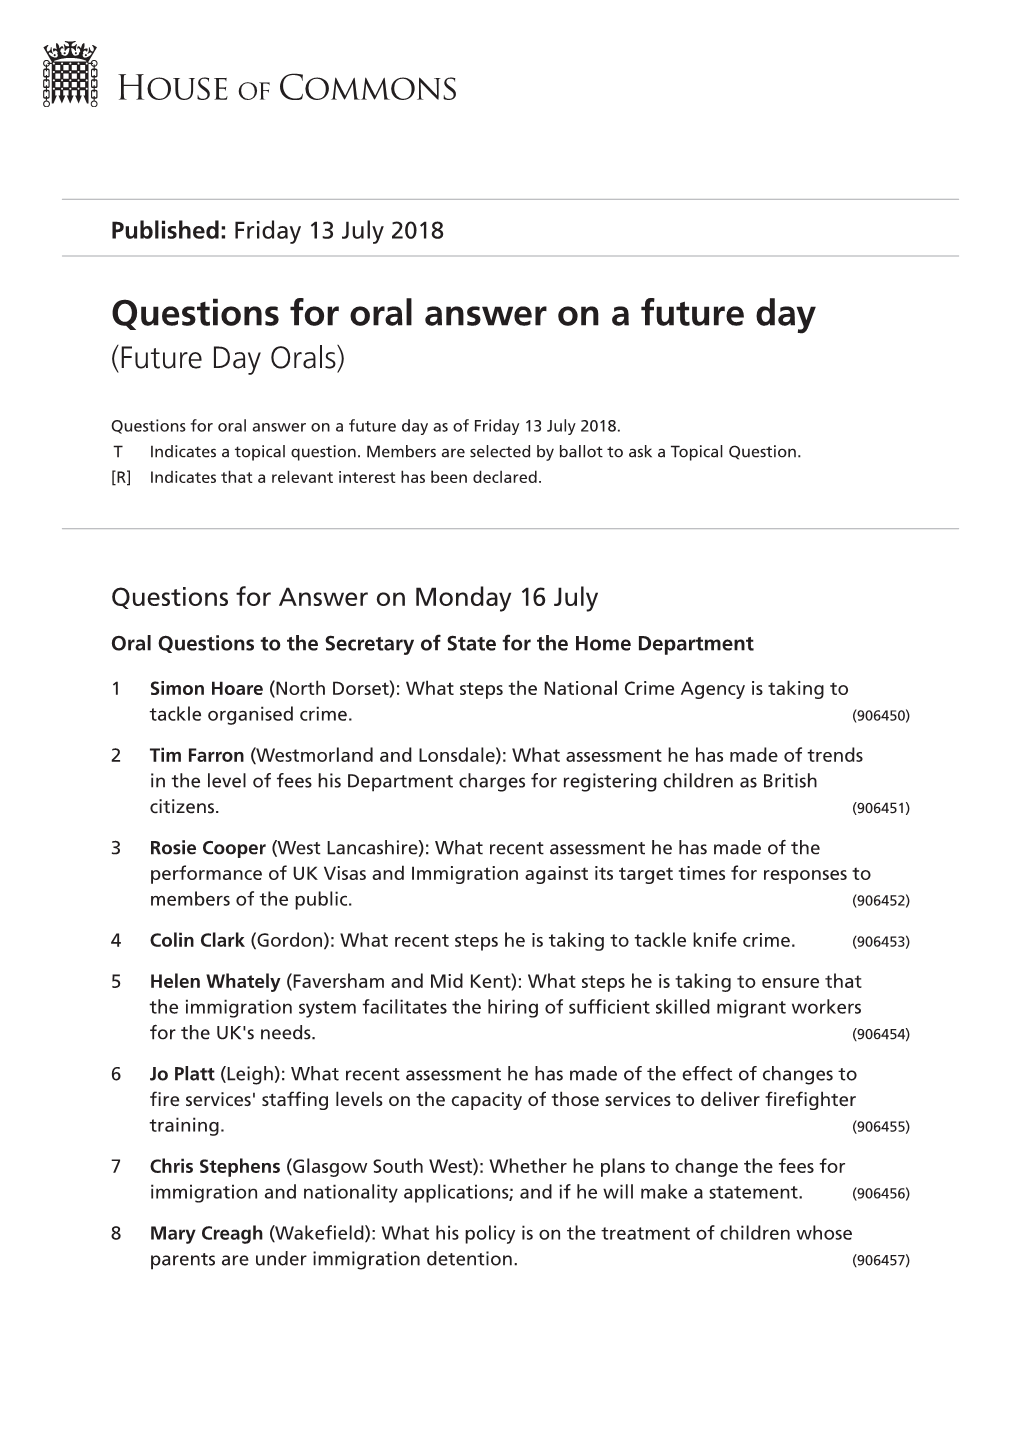 Future Oral Questions As of Fri 13 Jul 2018